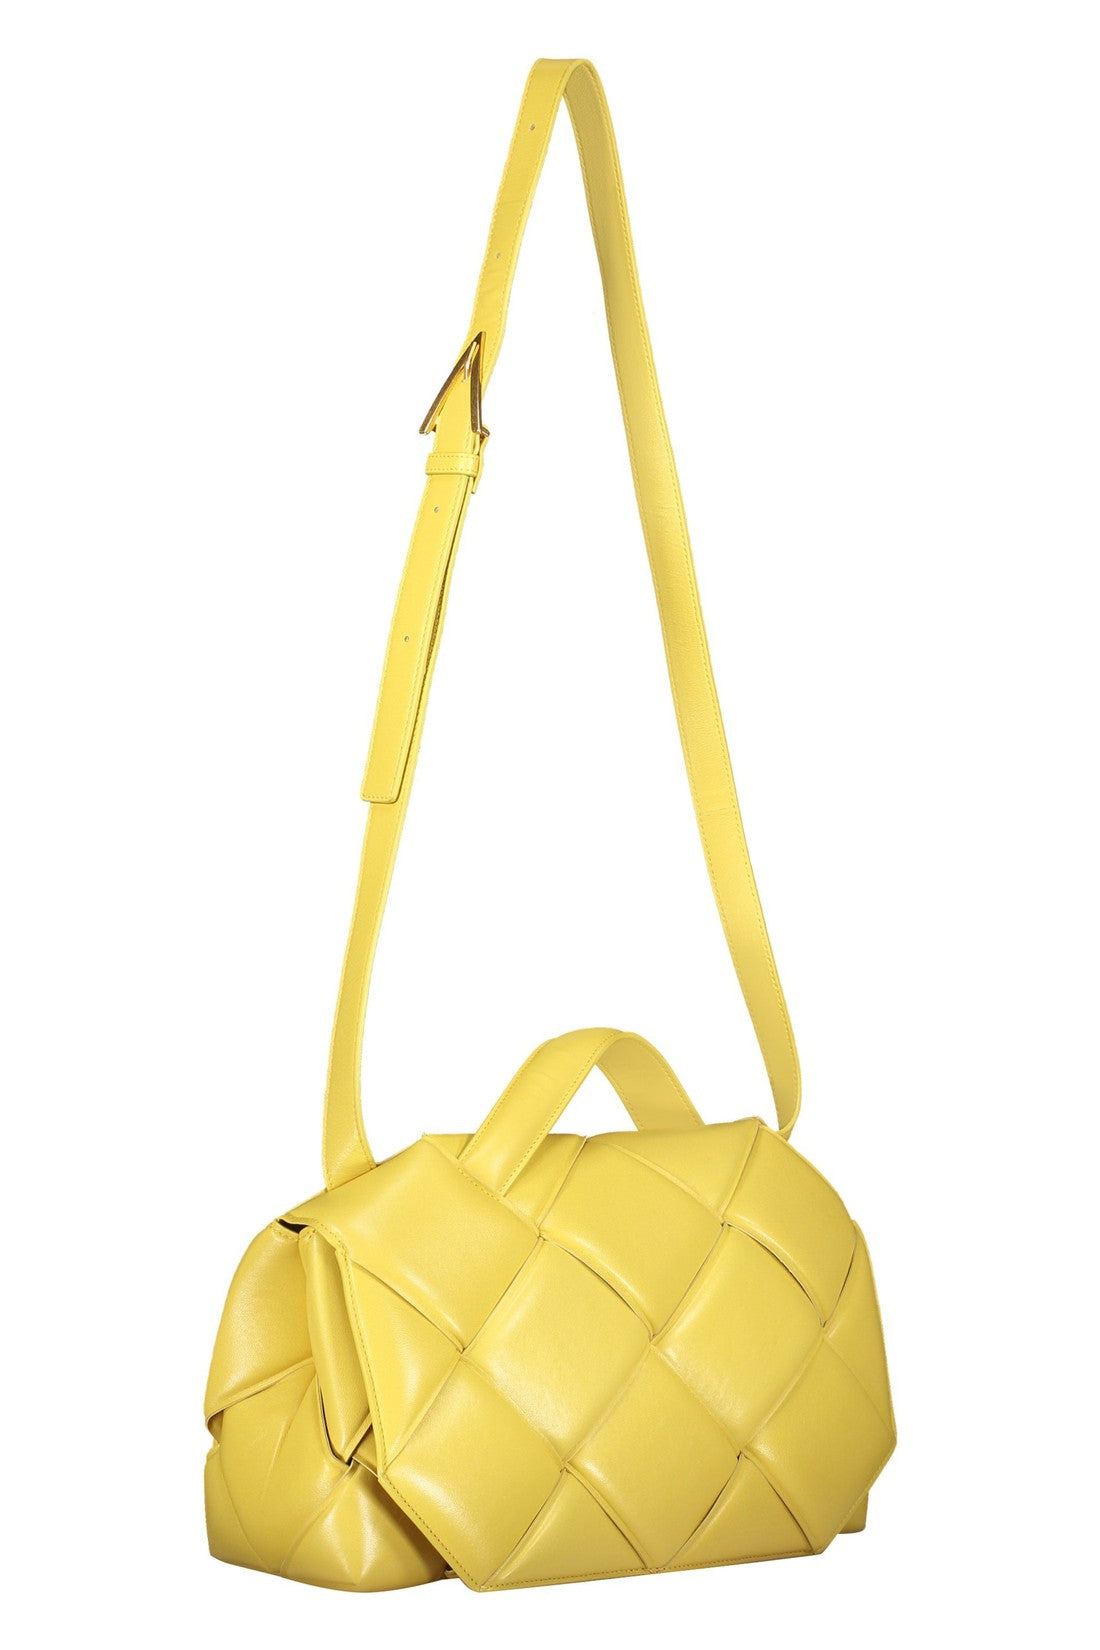 Intrecciato Nappa handbag-Accessoires-Bottega Veneta-OUTLET-SALE-TU-ARCHIVIST